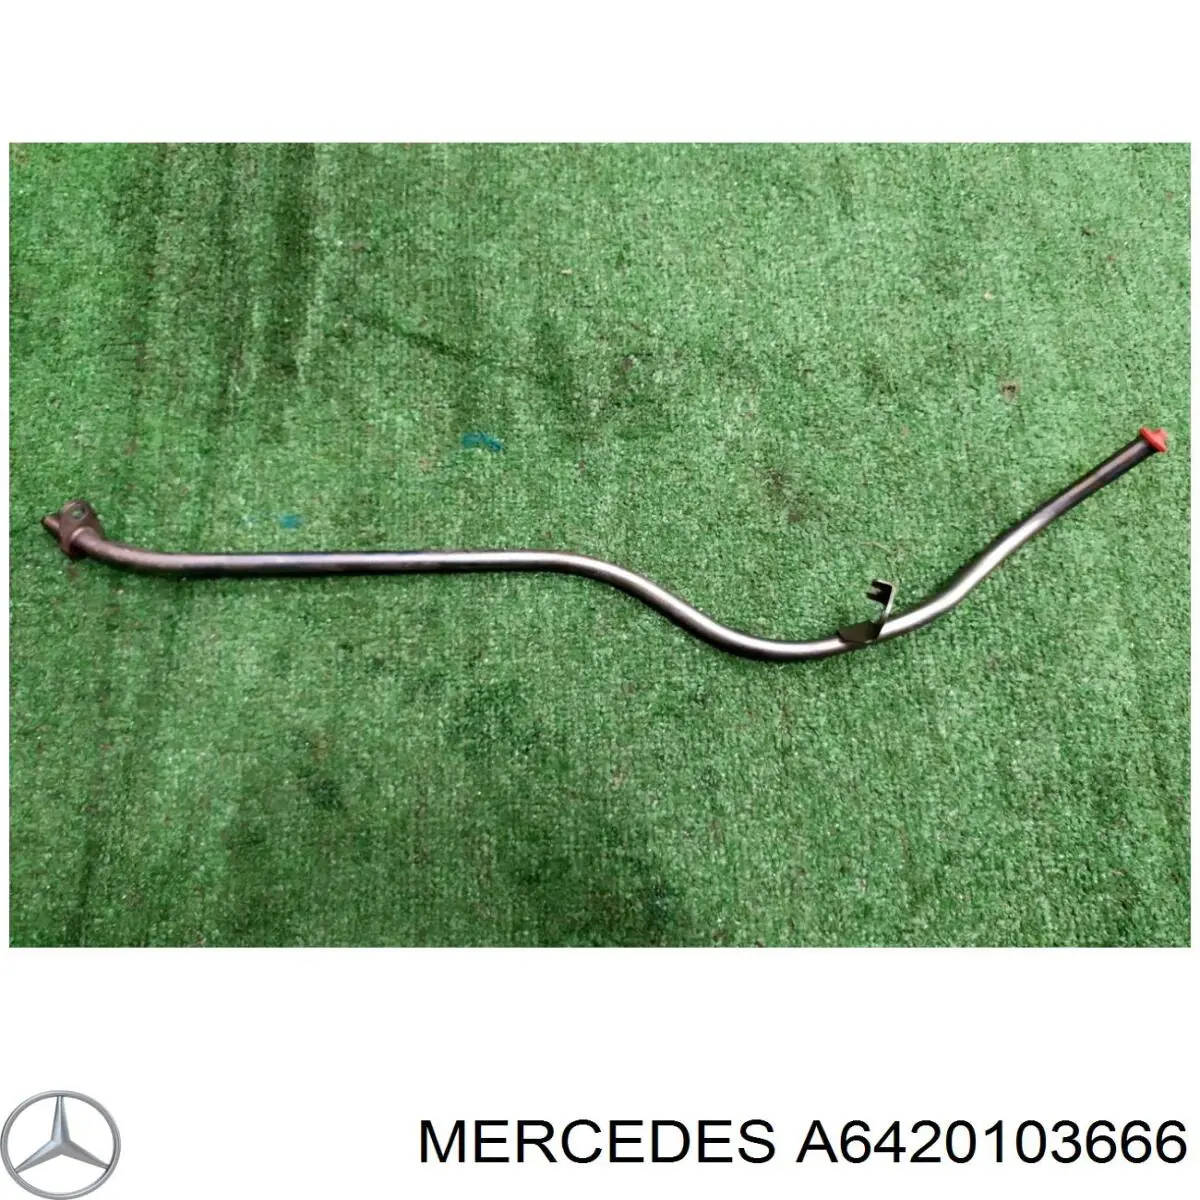 A6420103666 Mercedes направляющая щупа-индикатора уровня масла в двигателе